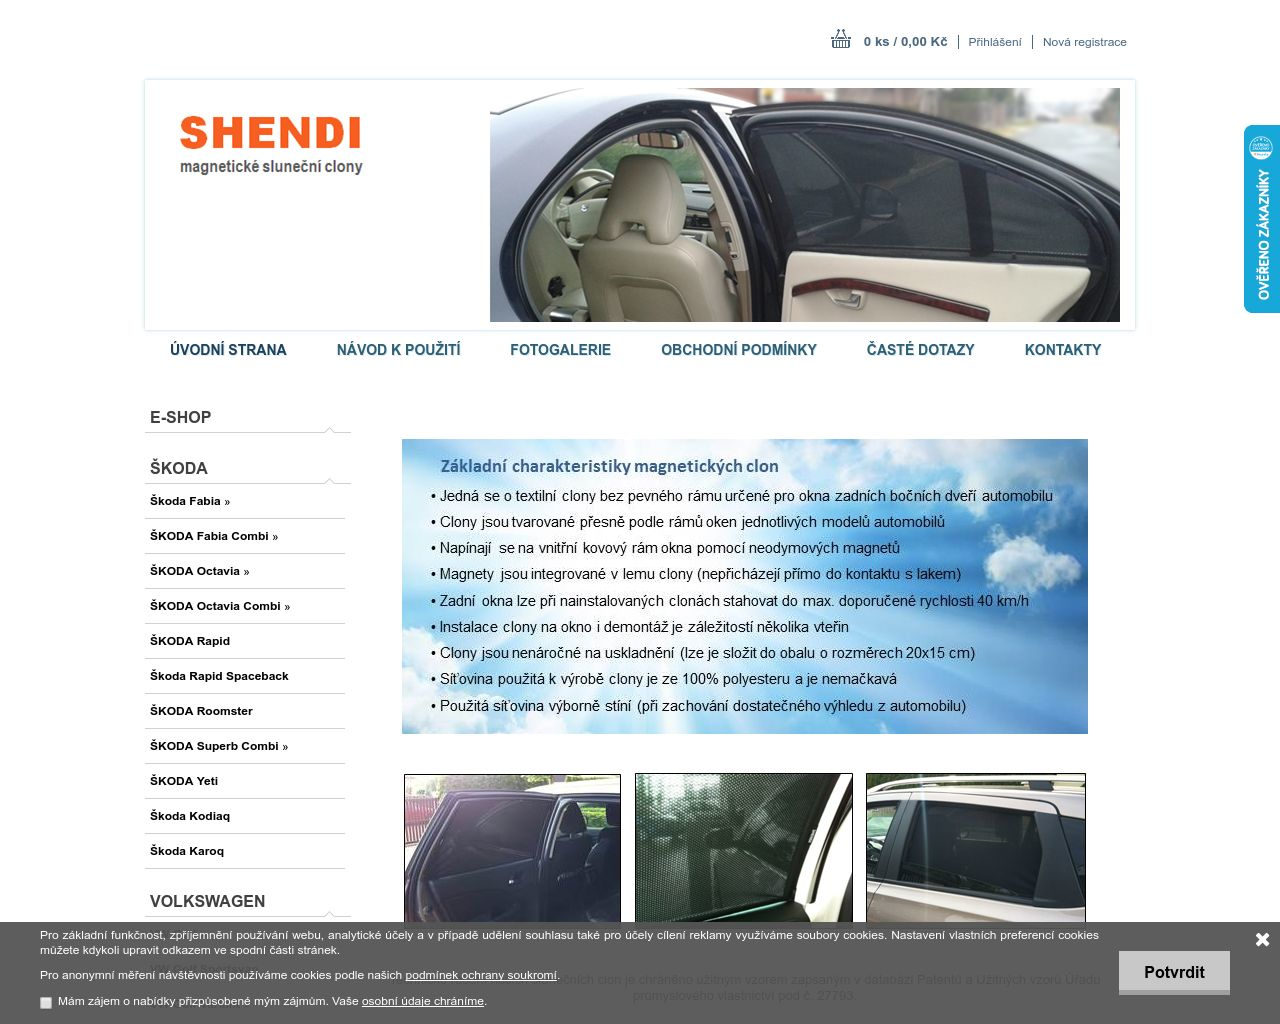 Site Image shendi.cz v 1280x1024